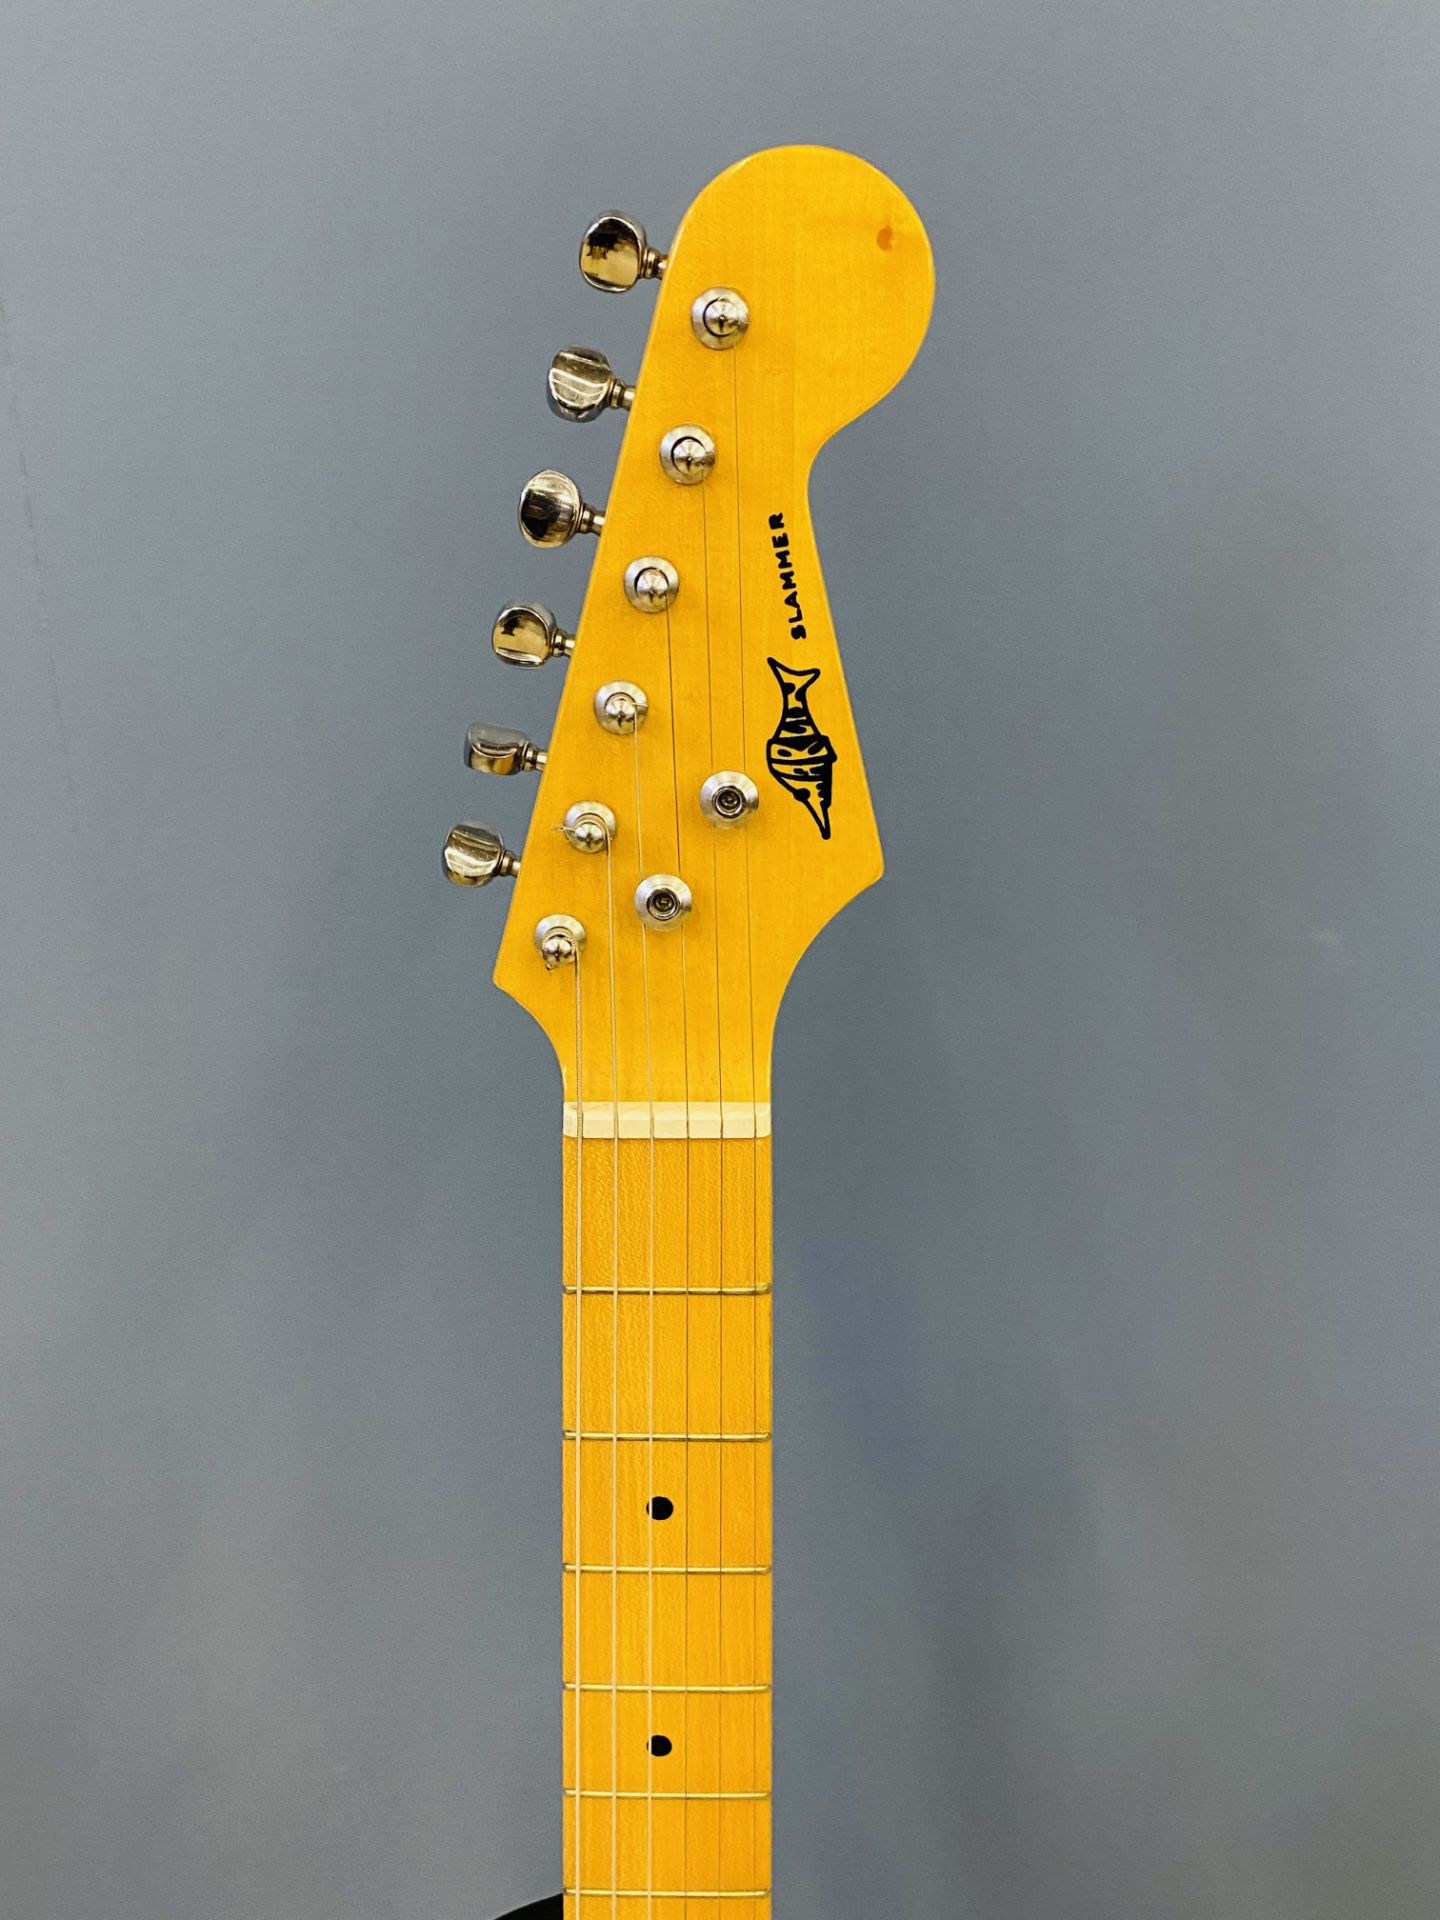 Marlin Slammer electric guitar. - Image 4 of 4